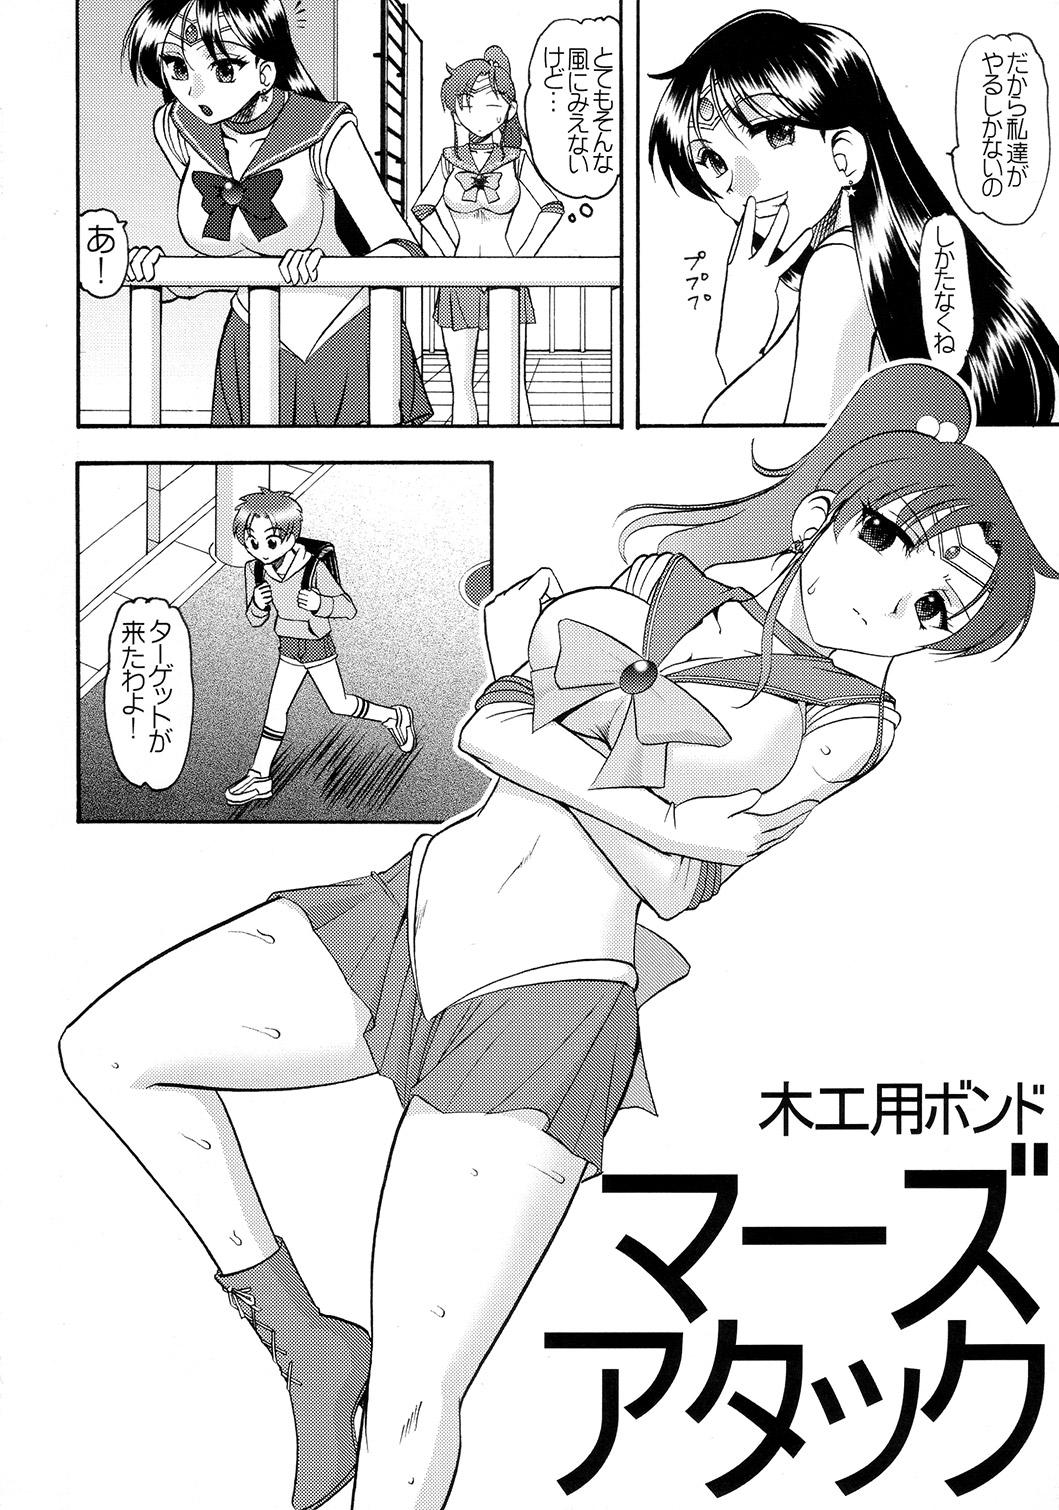 Pussylick SEMEDAIN G WORKS vol.33 - Wakusei Chokuretsu - Sailor moon Crossdresser - Page 5